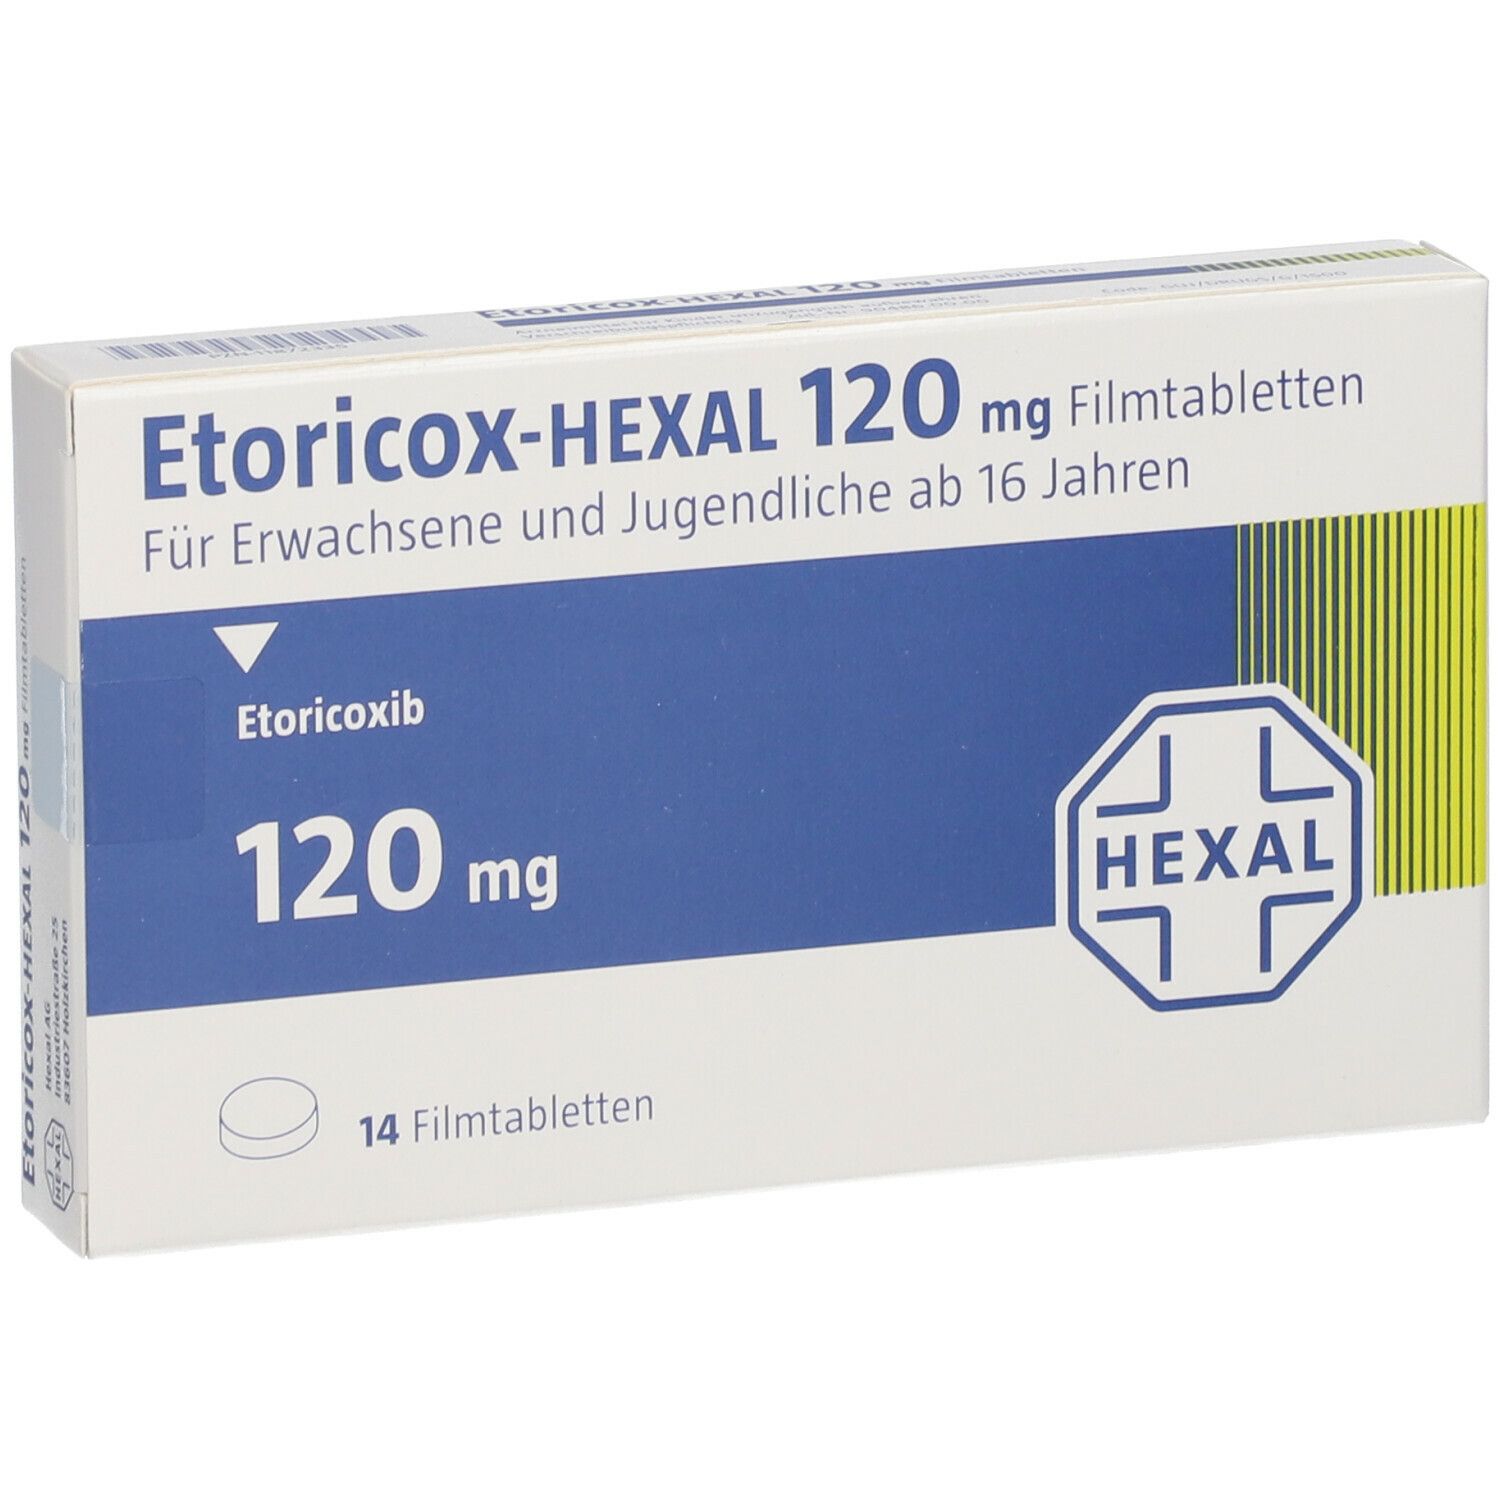 Etoricox-HEXAL 120 mg